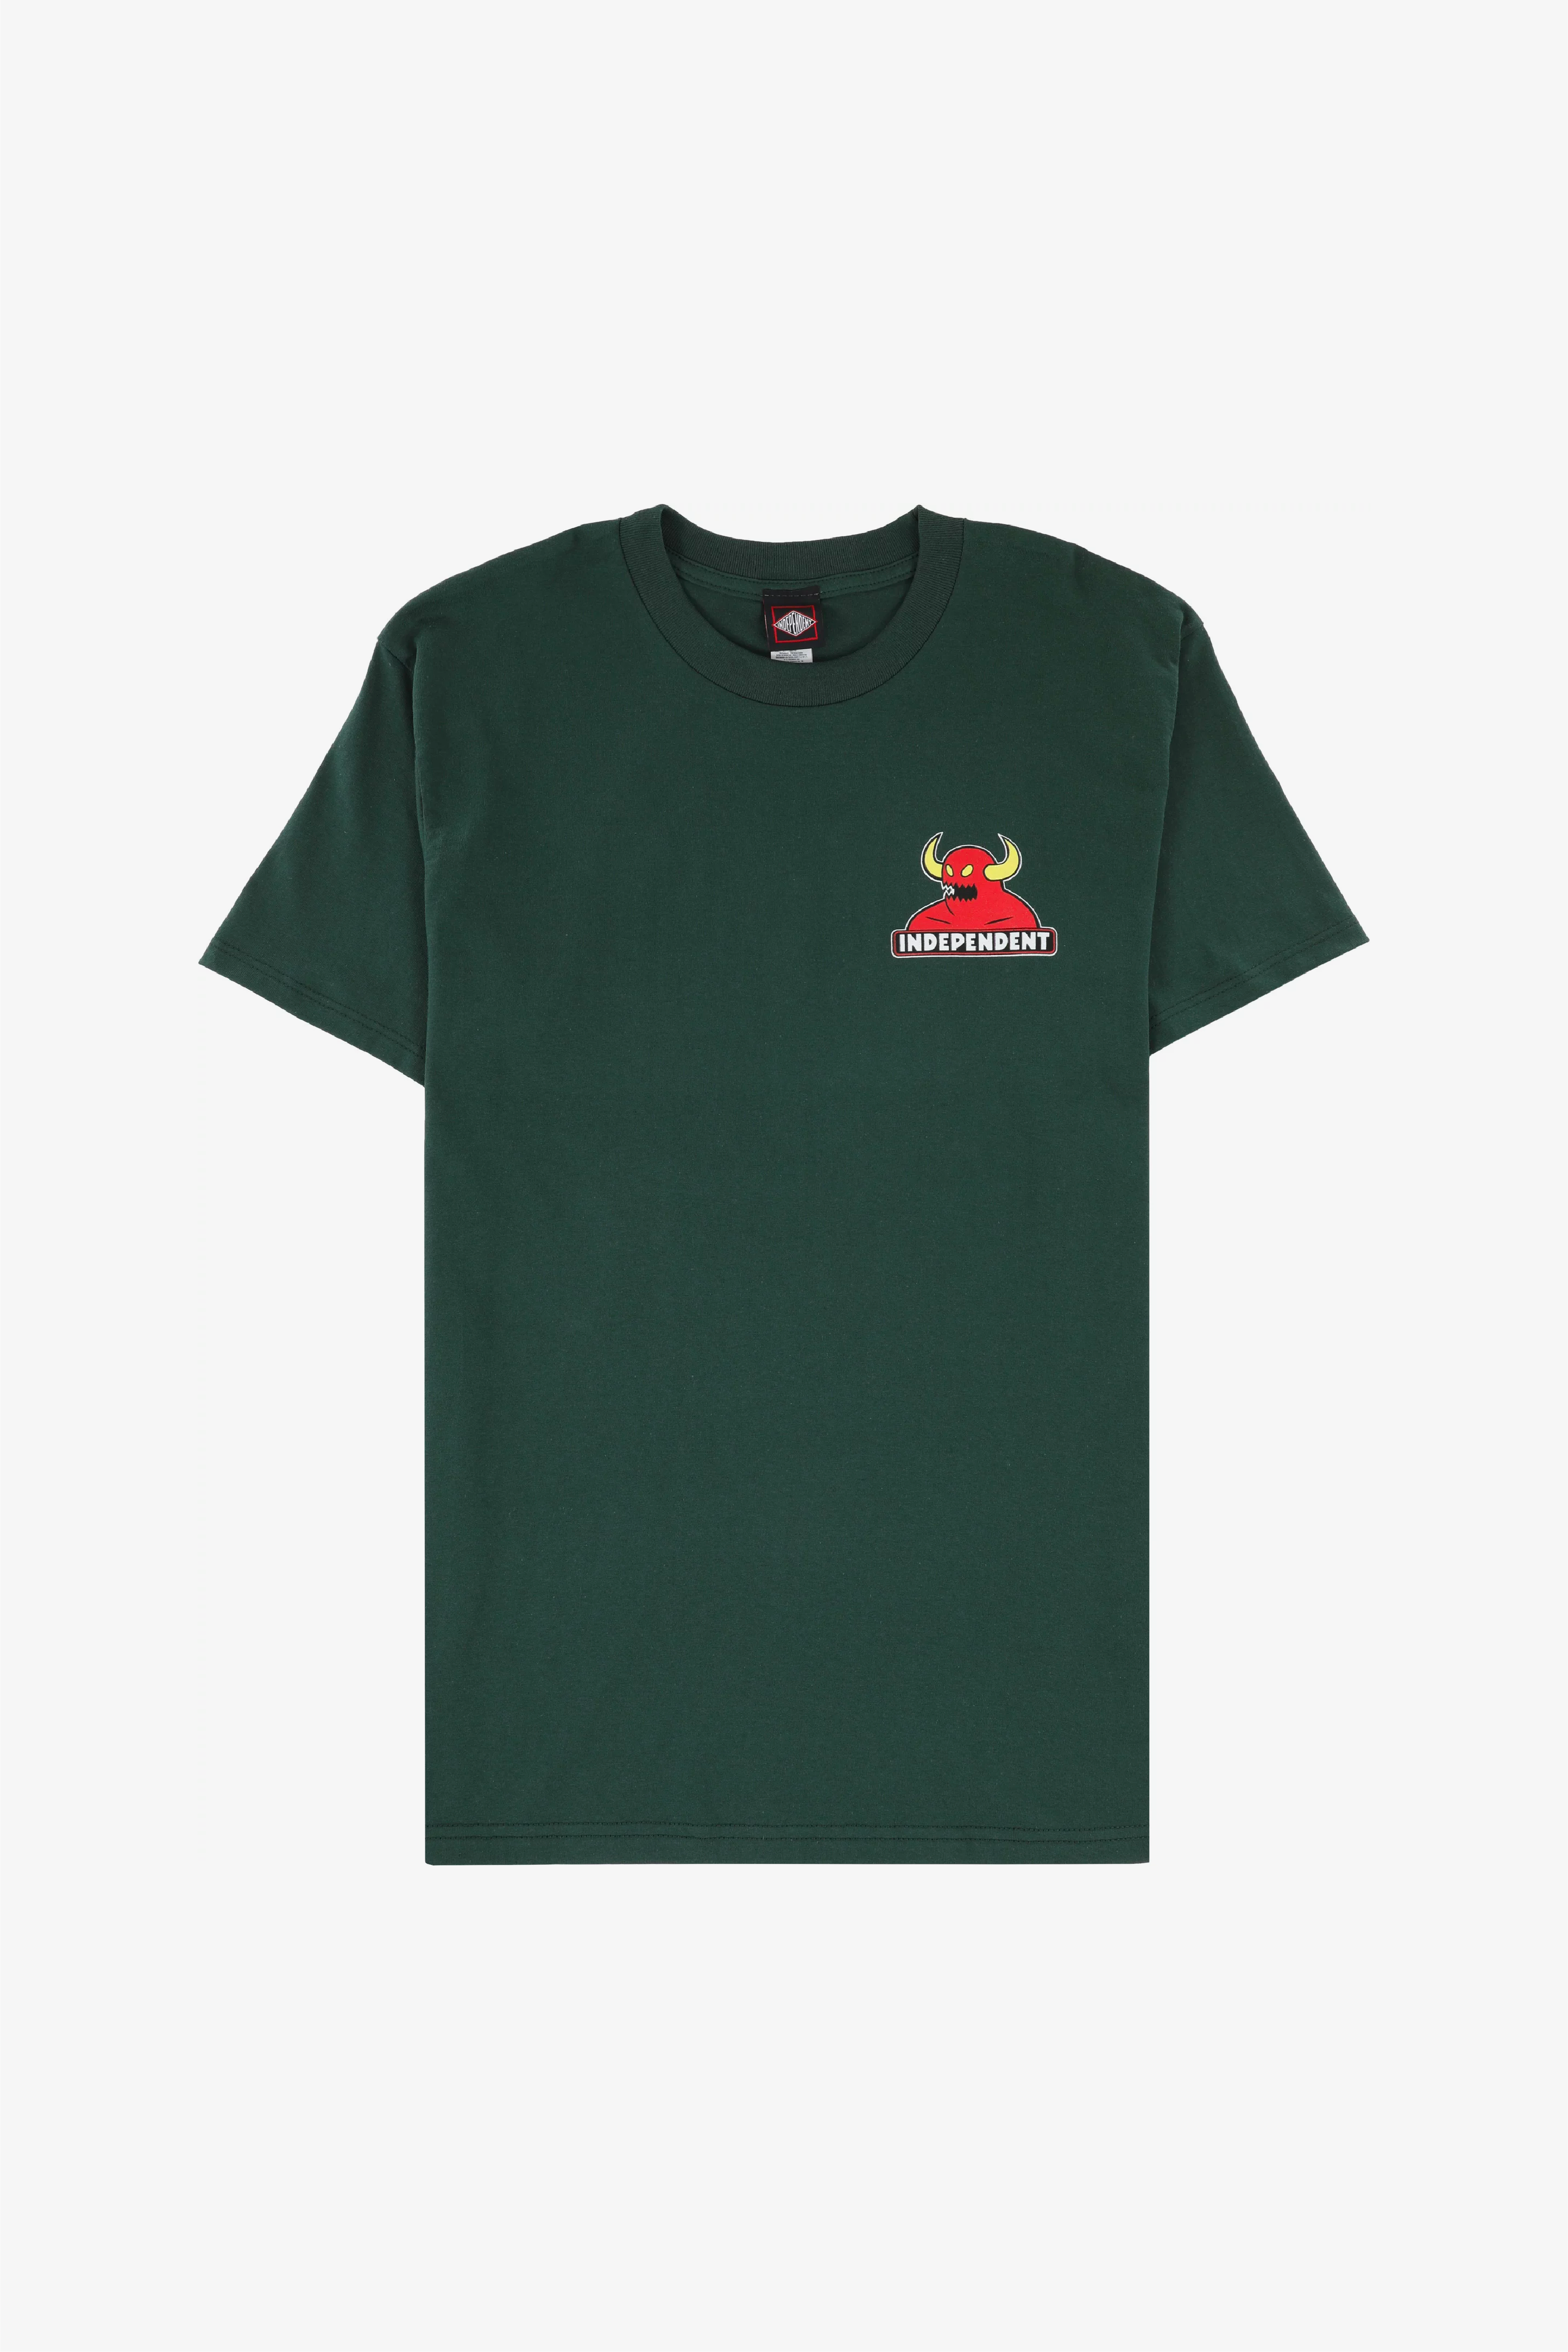 Selectshop FRAME - INDEPENDENT Toy Mash Up Tee T-Shirts Dubai